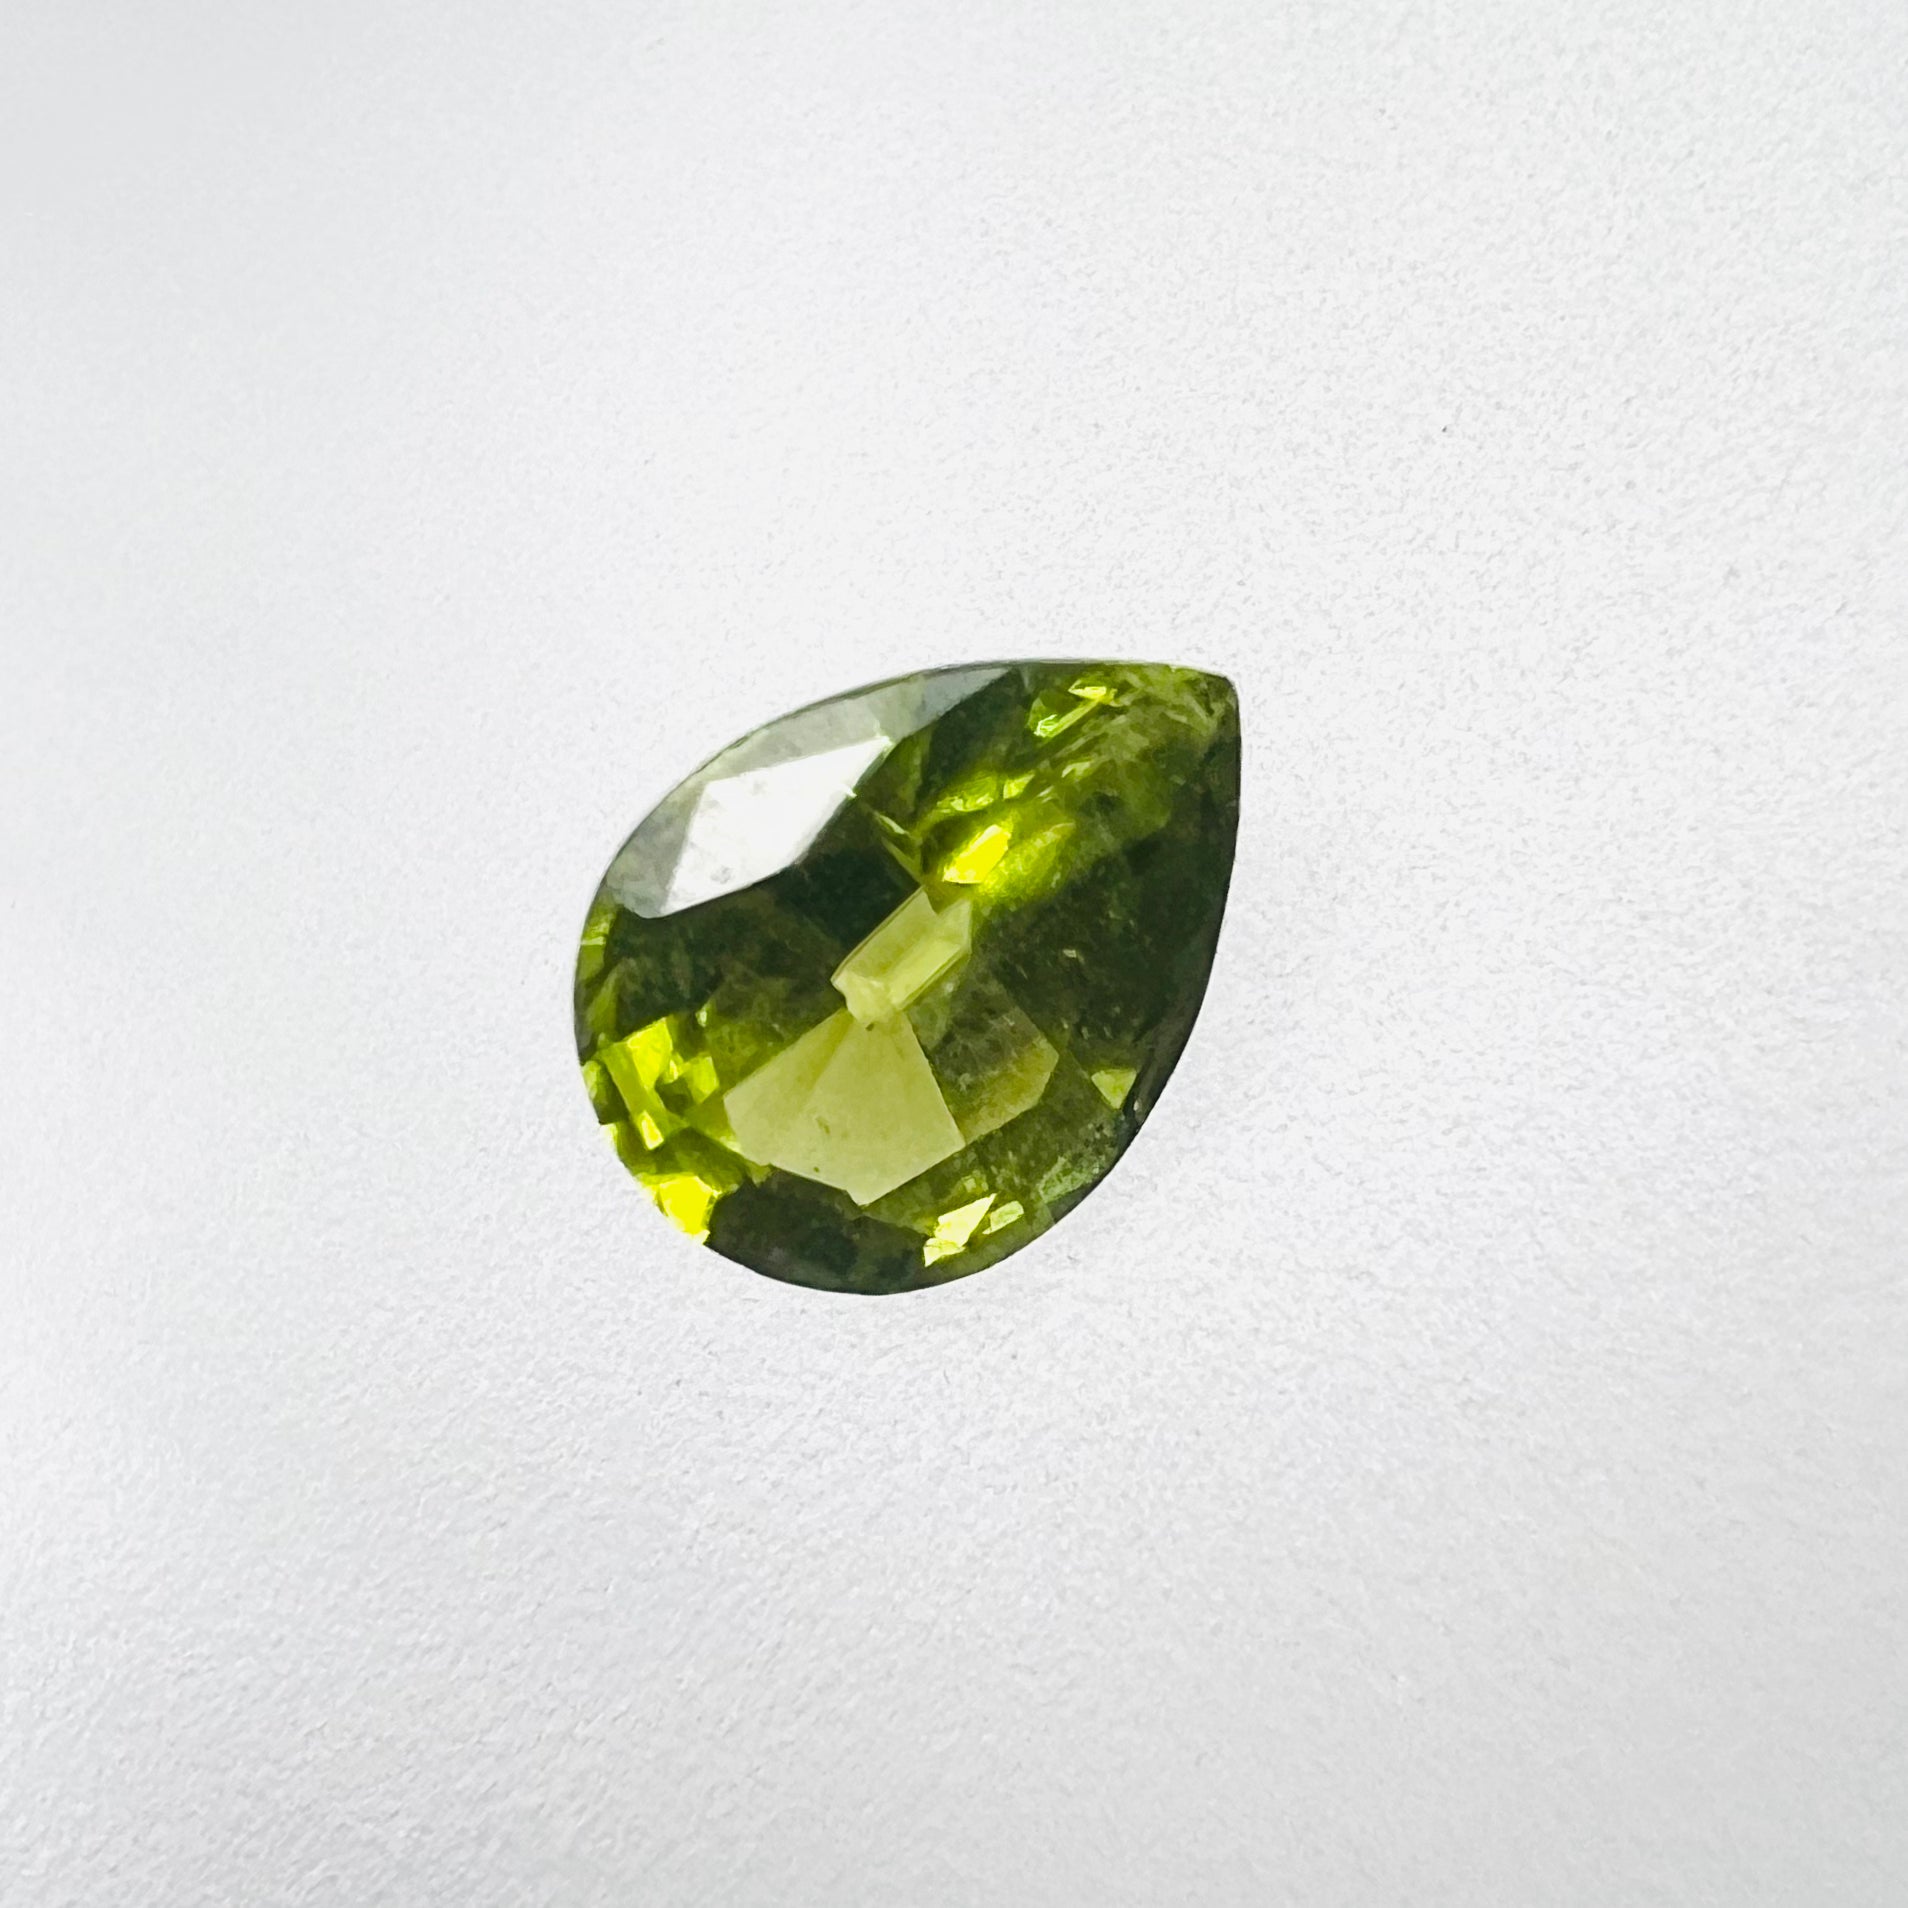 1.40CTW Loose Natural Pear Cut Peridot 8.14x6.14x4.14mm Earth mined Gemstone